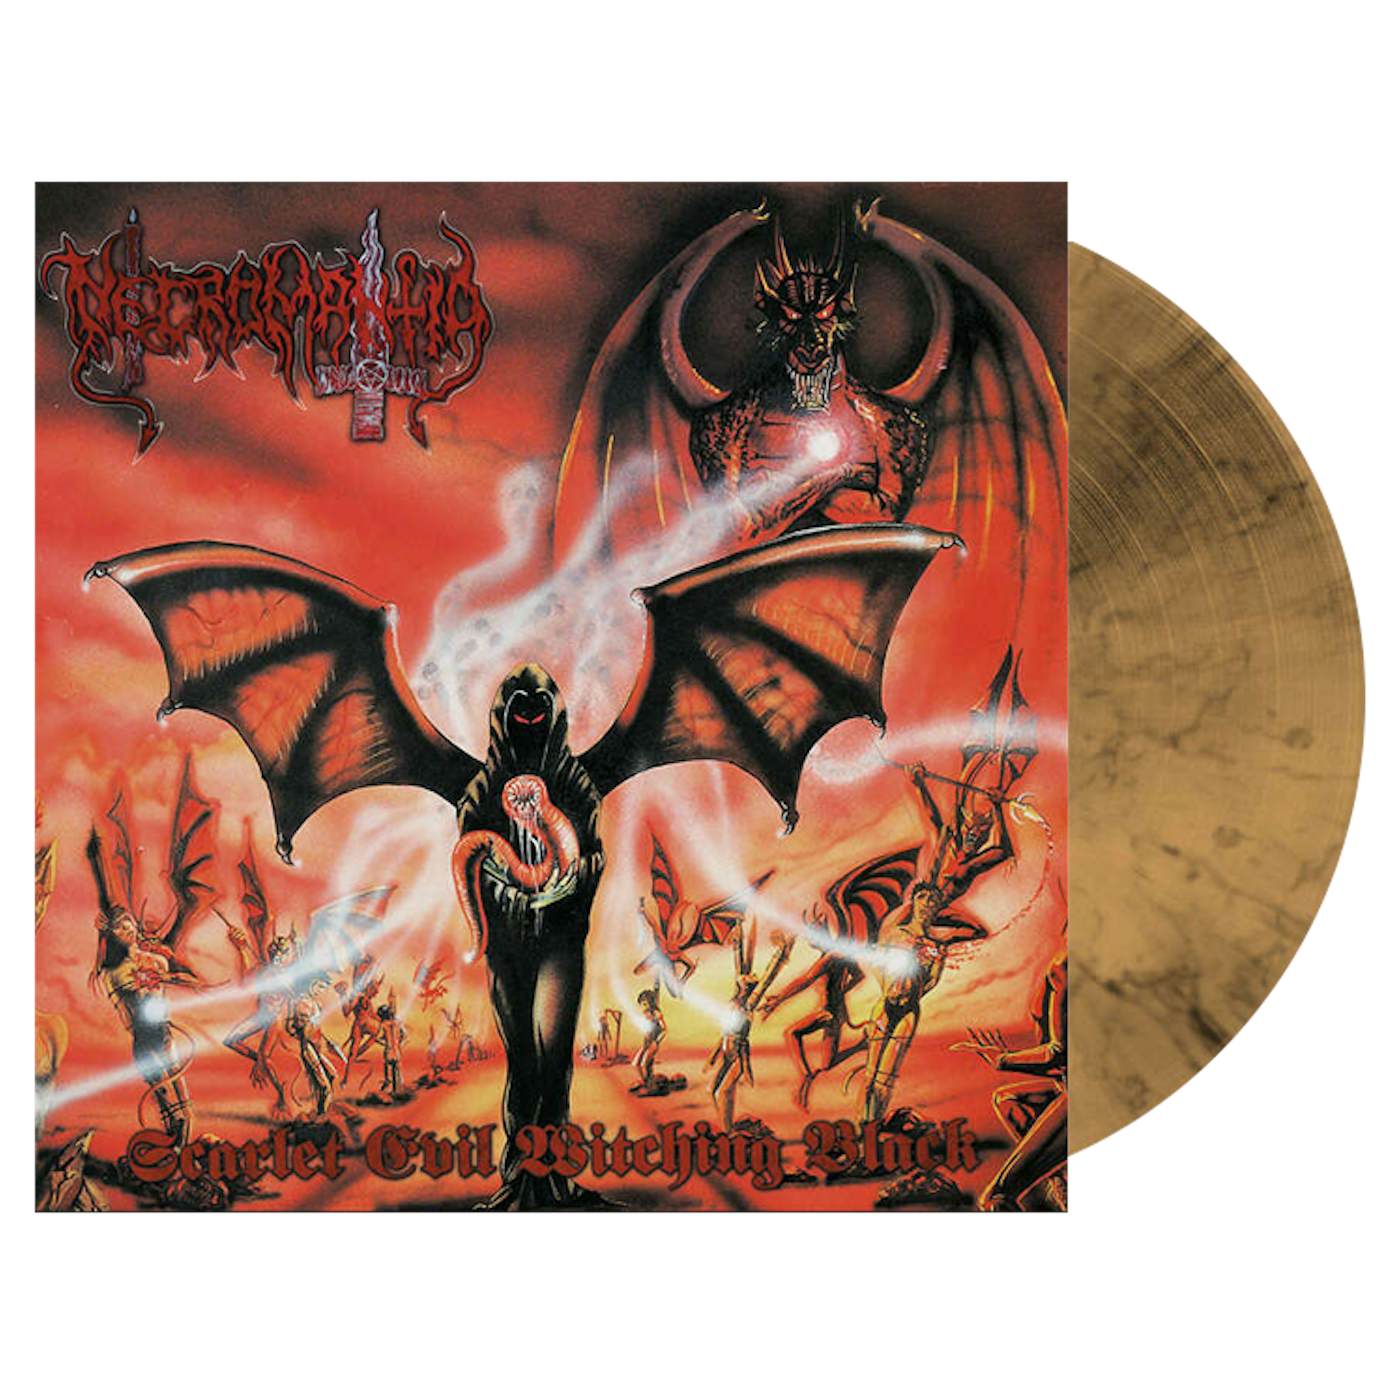 NECROMANTIA - 'Scarlet Evil Witching Black' LP (Black Beer Marble) (Vinyl)